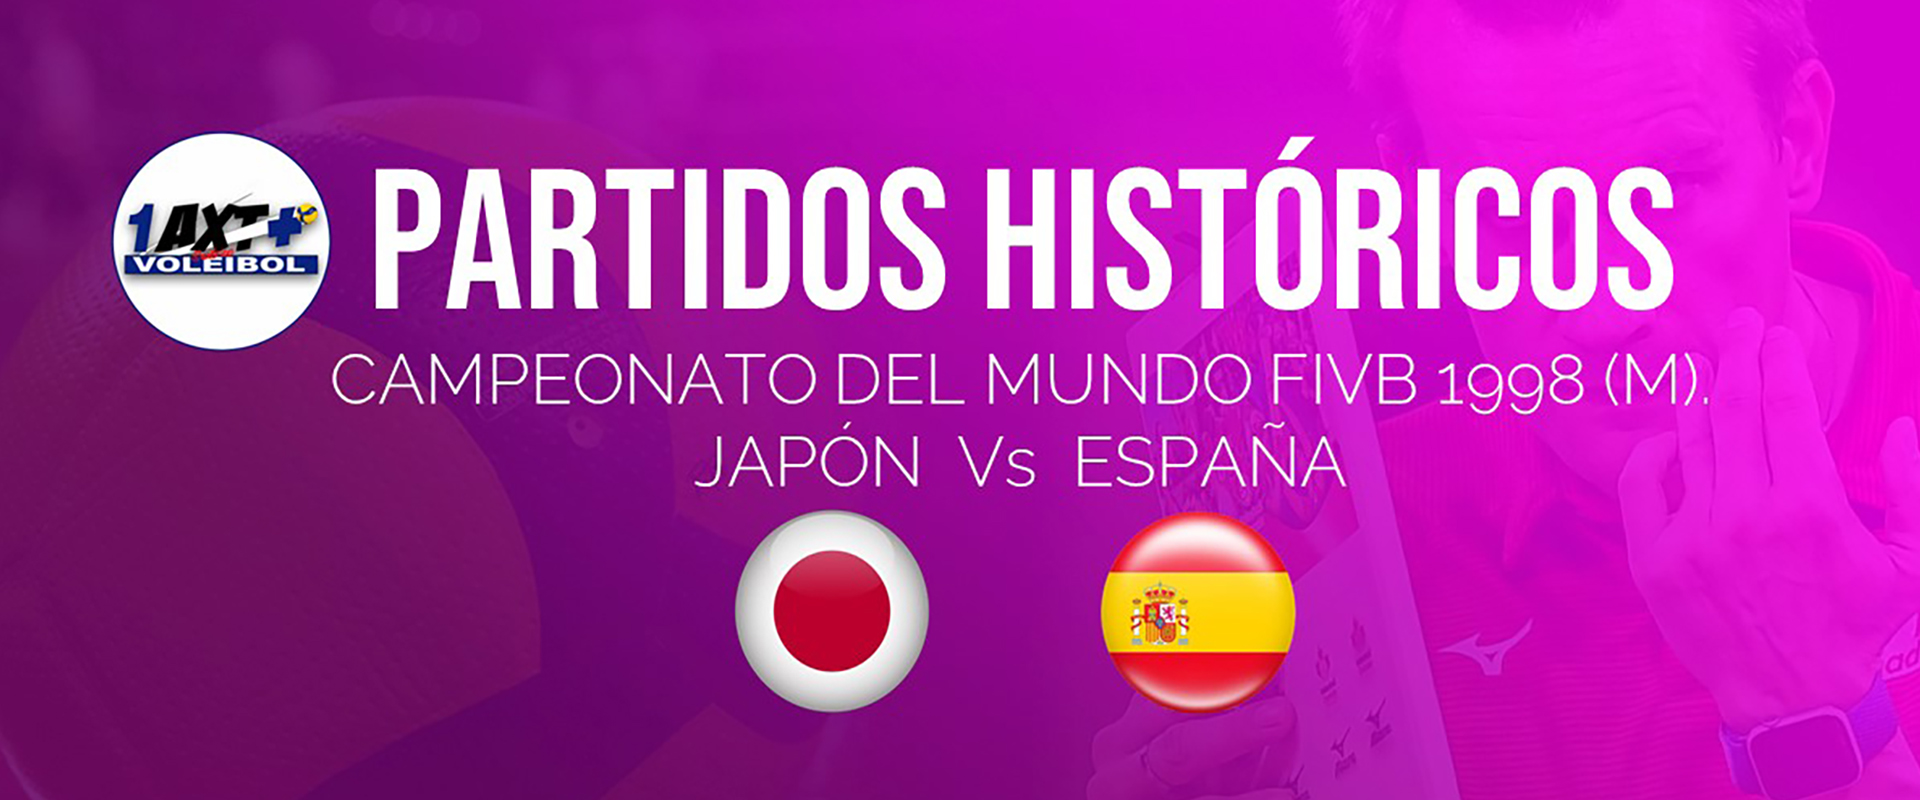 Campeonato del Mundo FIVB 1998 (M). Japón Vs España